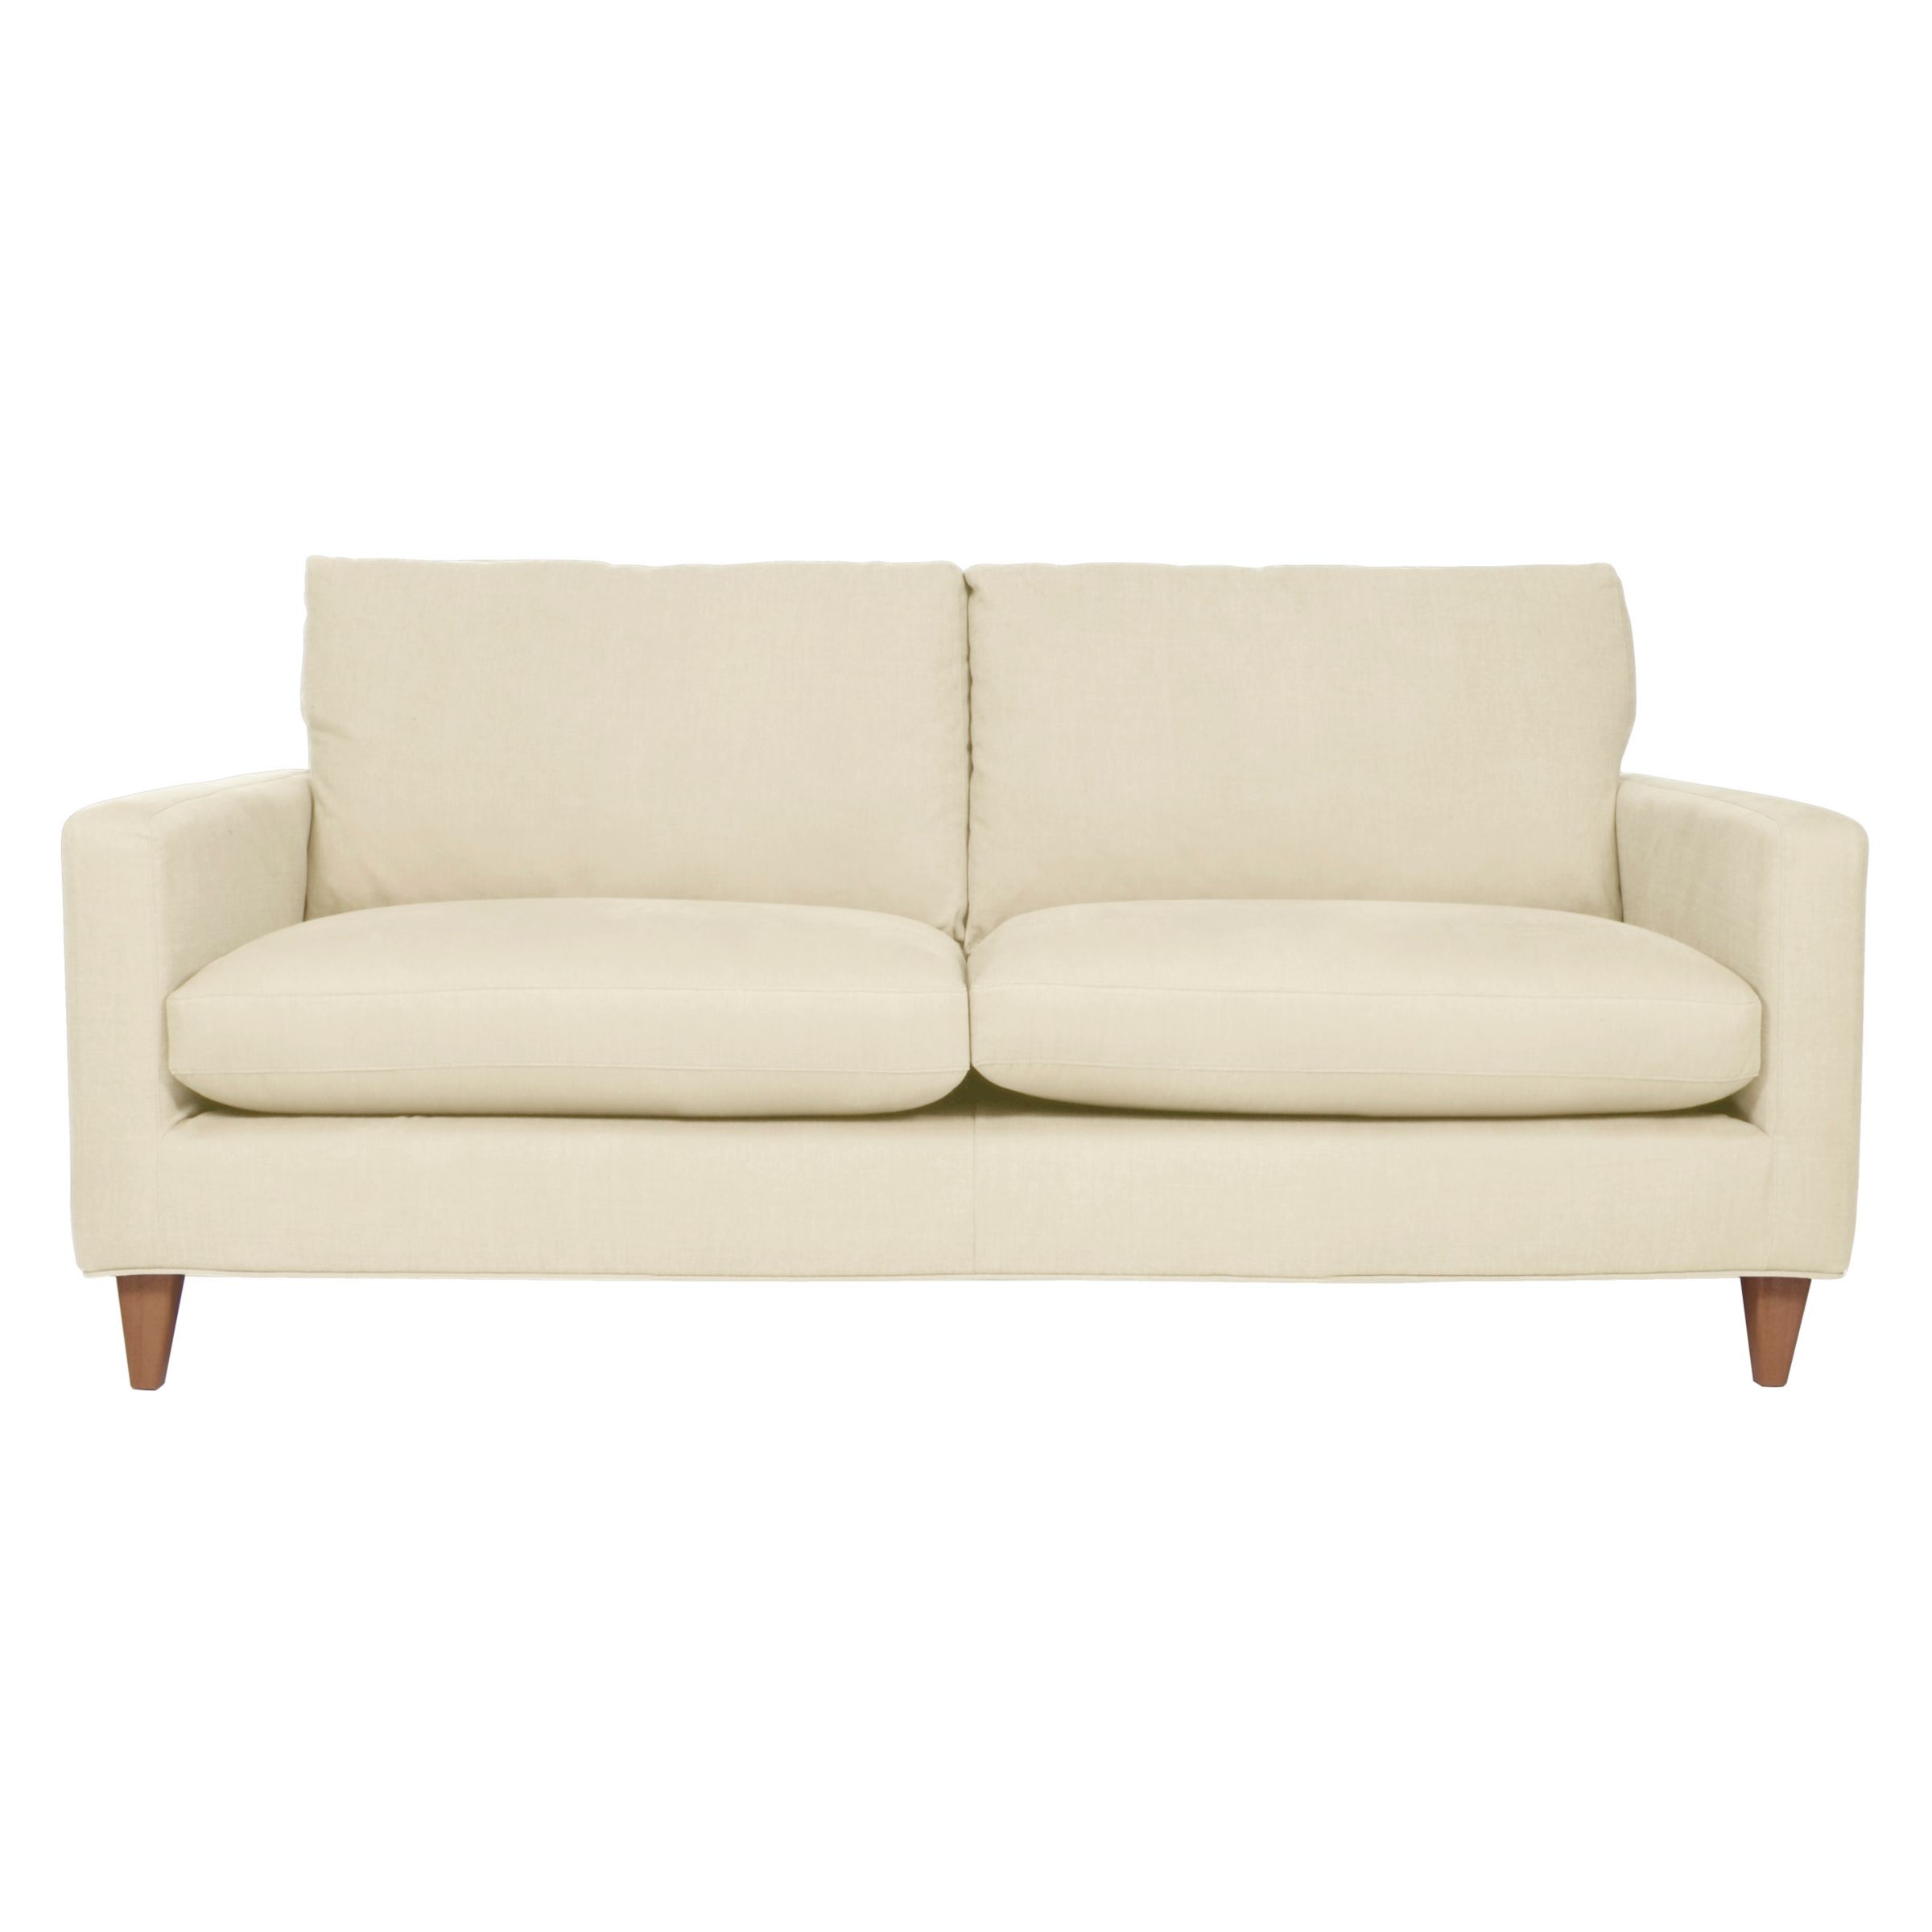 John Lewis Bailey Large Sofa, Oban Natural, width 194cm